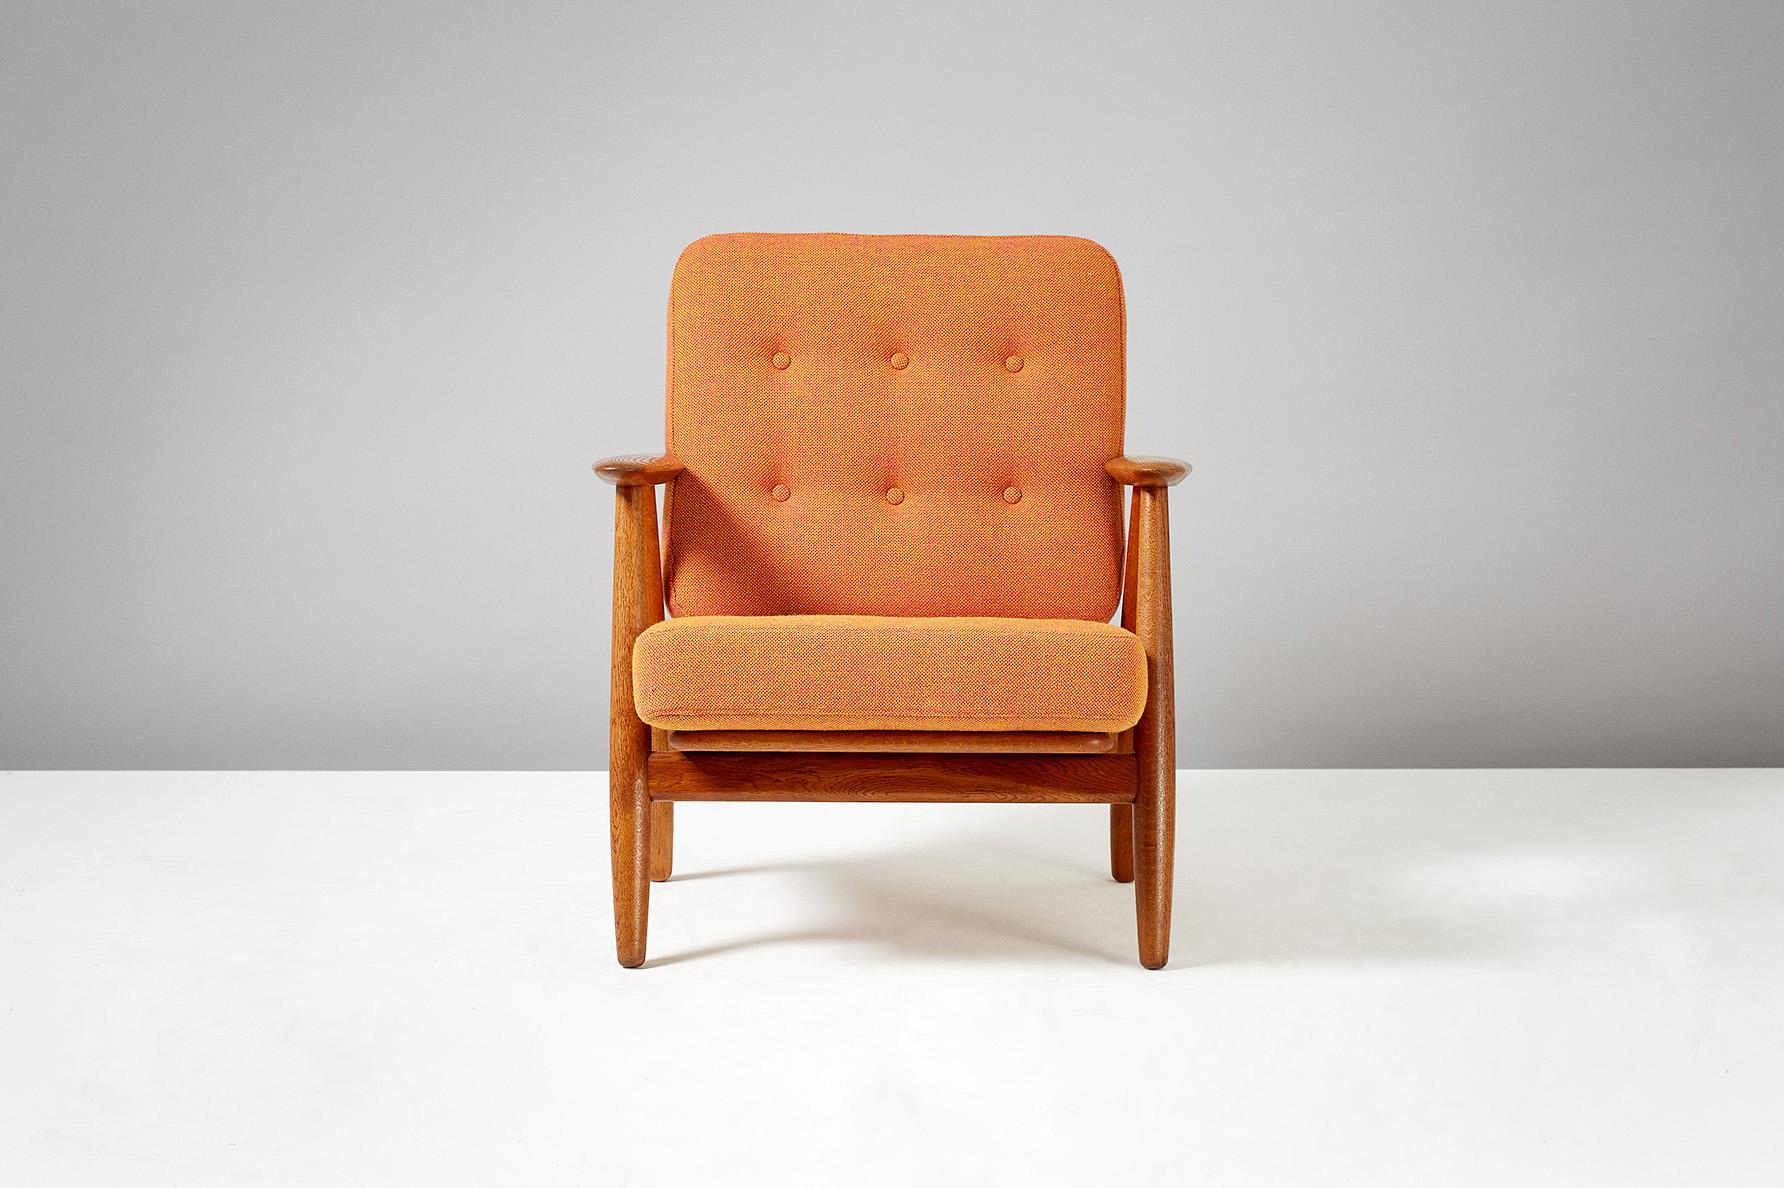 Hans J. Wegner

GE-240 'Cigar' chair, 1955

Produced by GETAMA, Gedsted, Denmark. Oak frame with original sprung cushions reupholstered in orange Kvadrat Hallingdal wool fabric. Maker's brand under seat.

